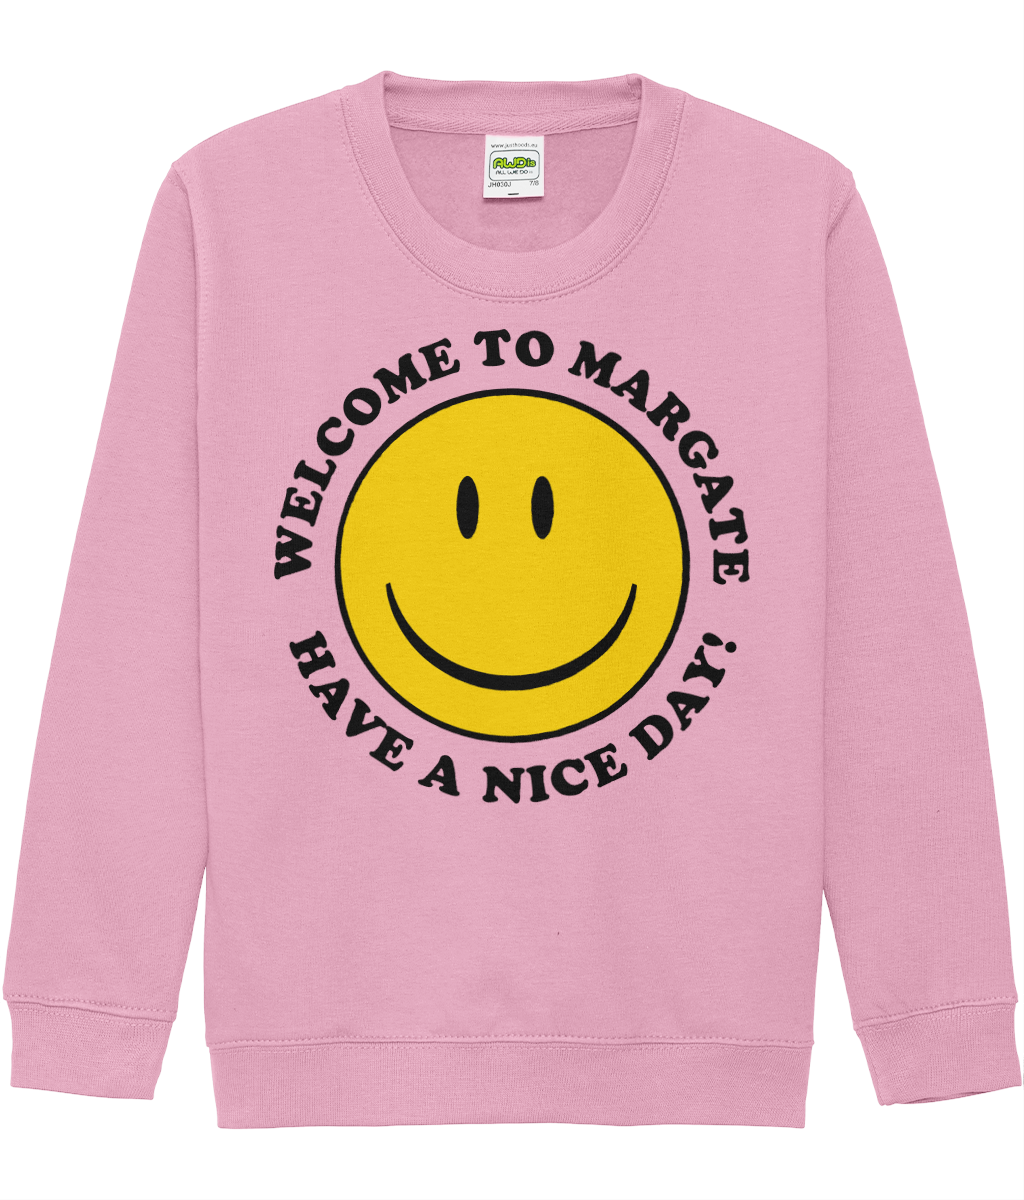 Kids Have A Nice Day Sweatshirt Pink